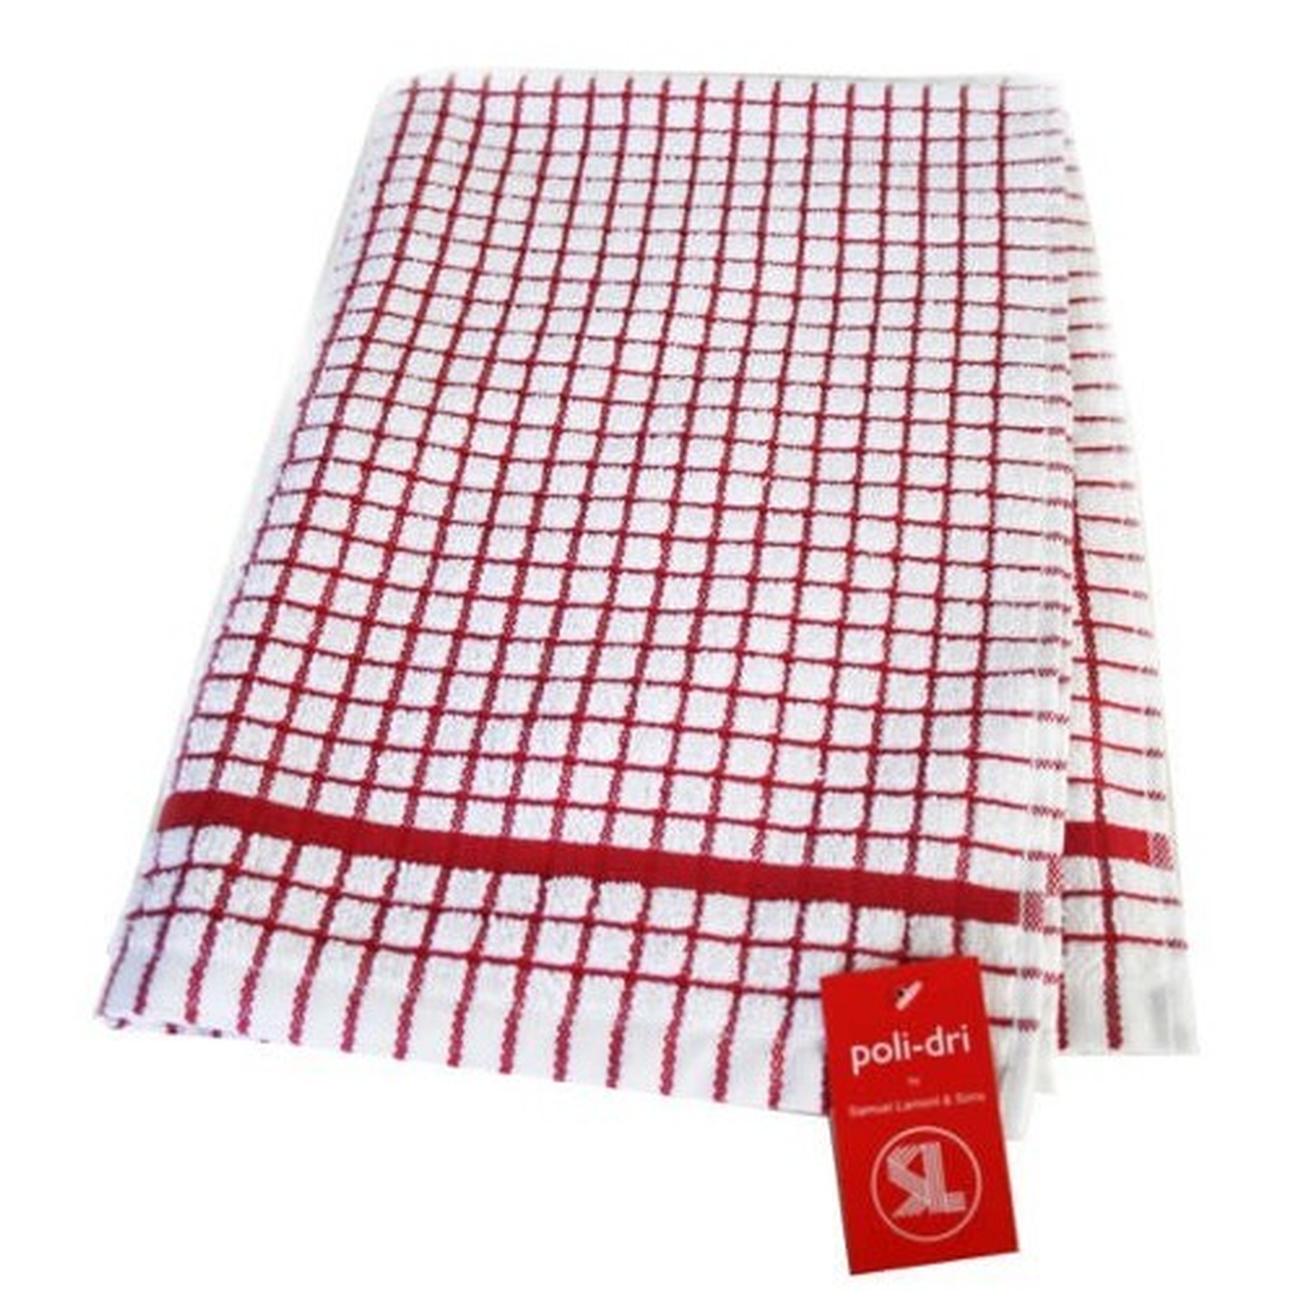 samuel-lamont-poli-dry-tea-towel-red - Samuel Lamont Poli Dri Tea Towel Red